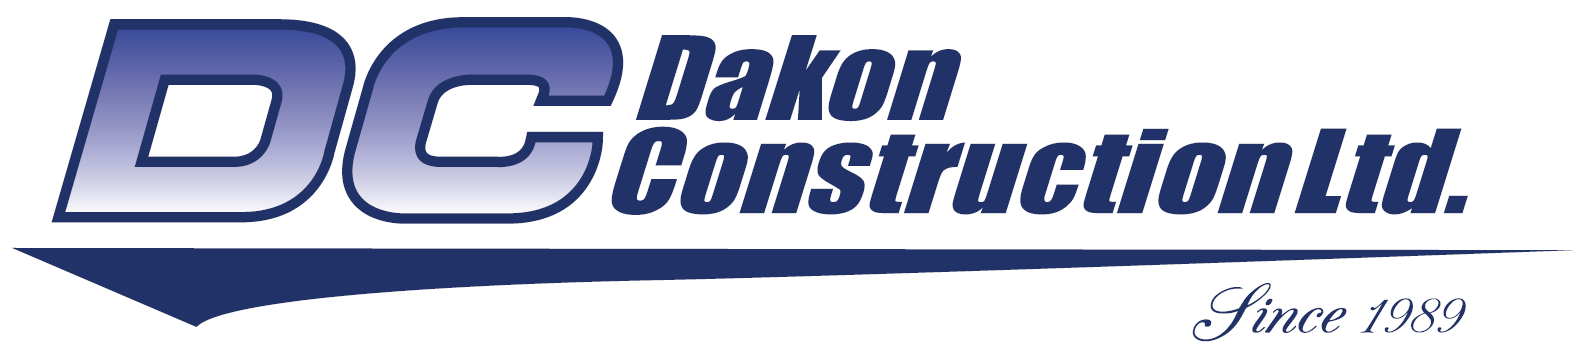 Dakon Construction Ltd.